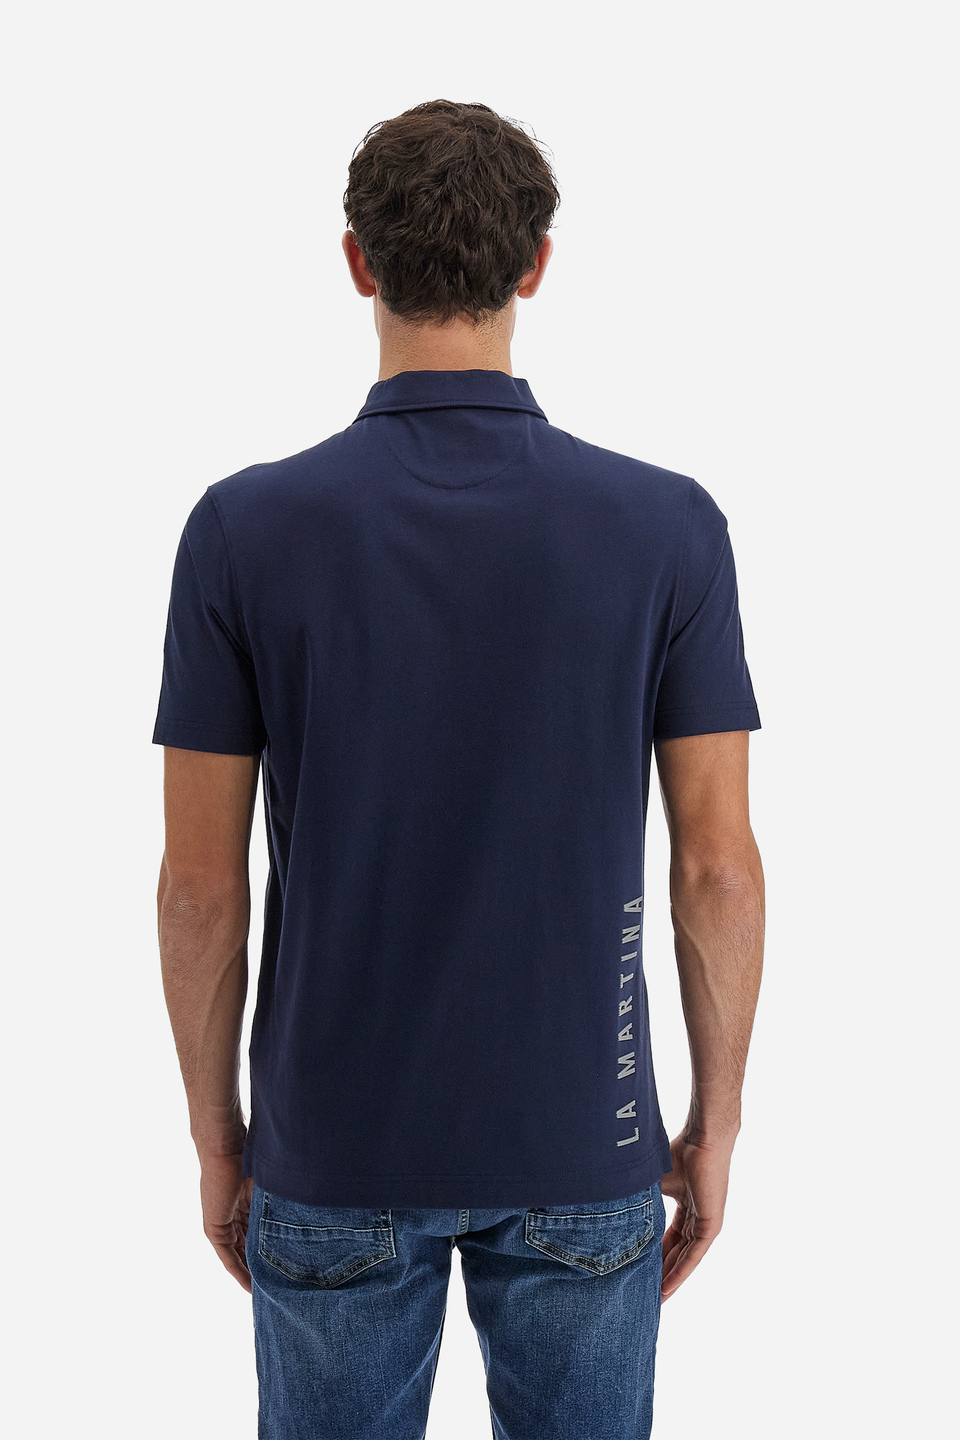 Men's short-sleeved polo shirt Logos with flat mini pocket in solid color - Vasant | La Martina - Official Online Shop